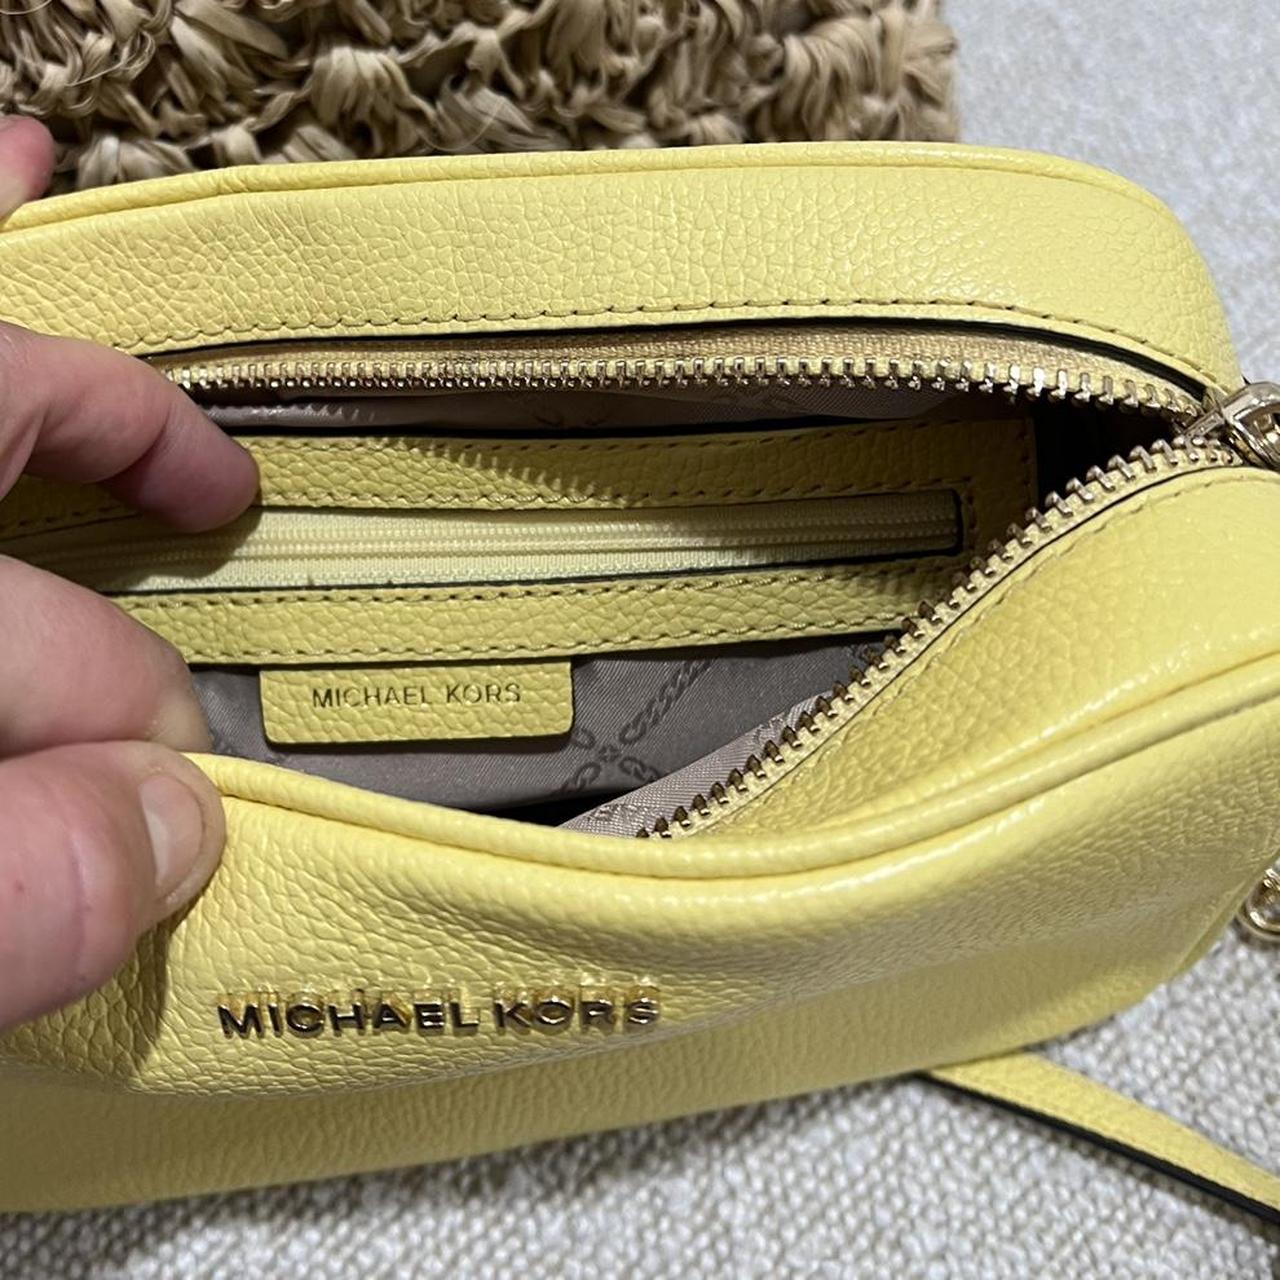 Michael Kors Jet Set Tote Yellow Cream Leather Handbag Purse | eBay